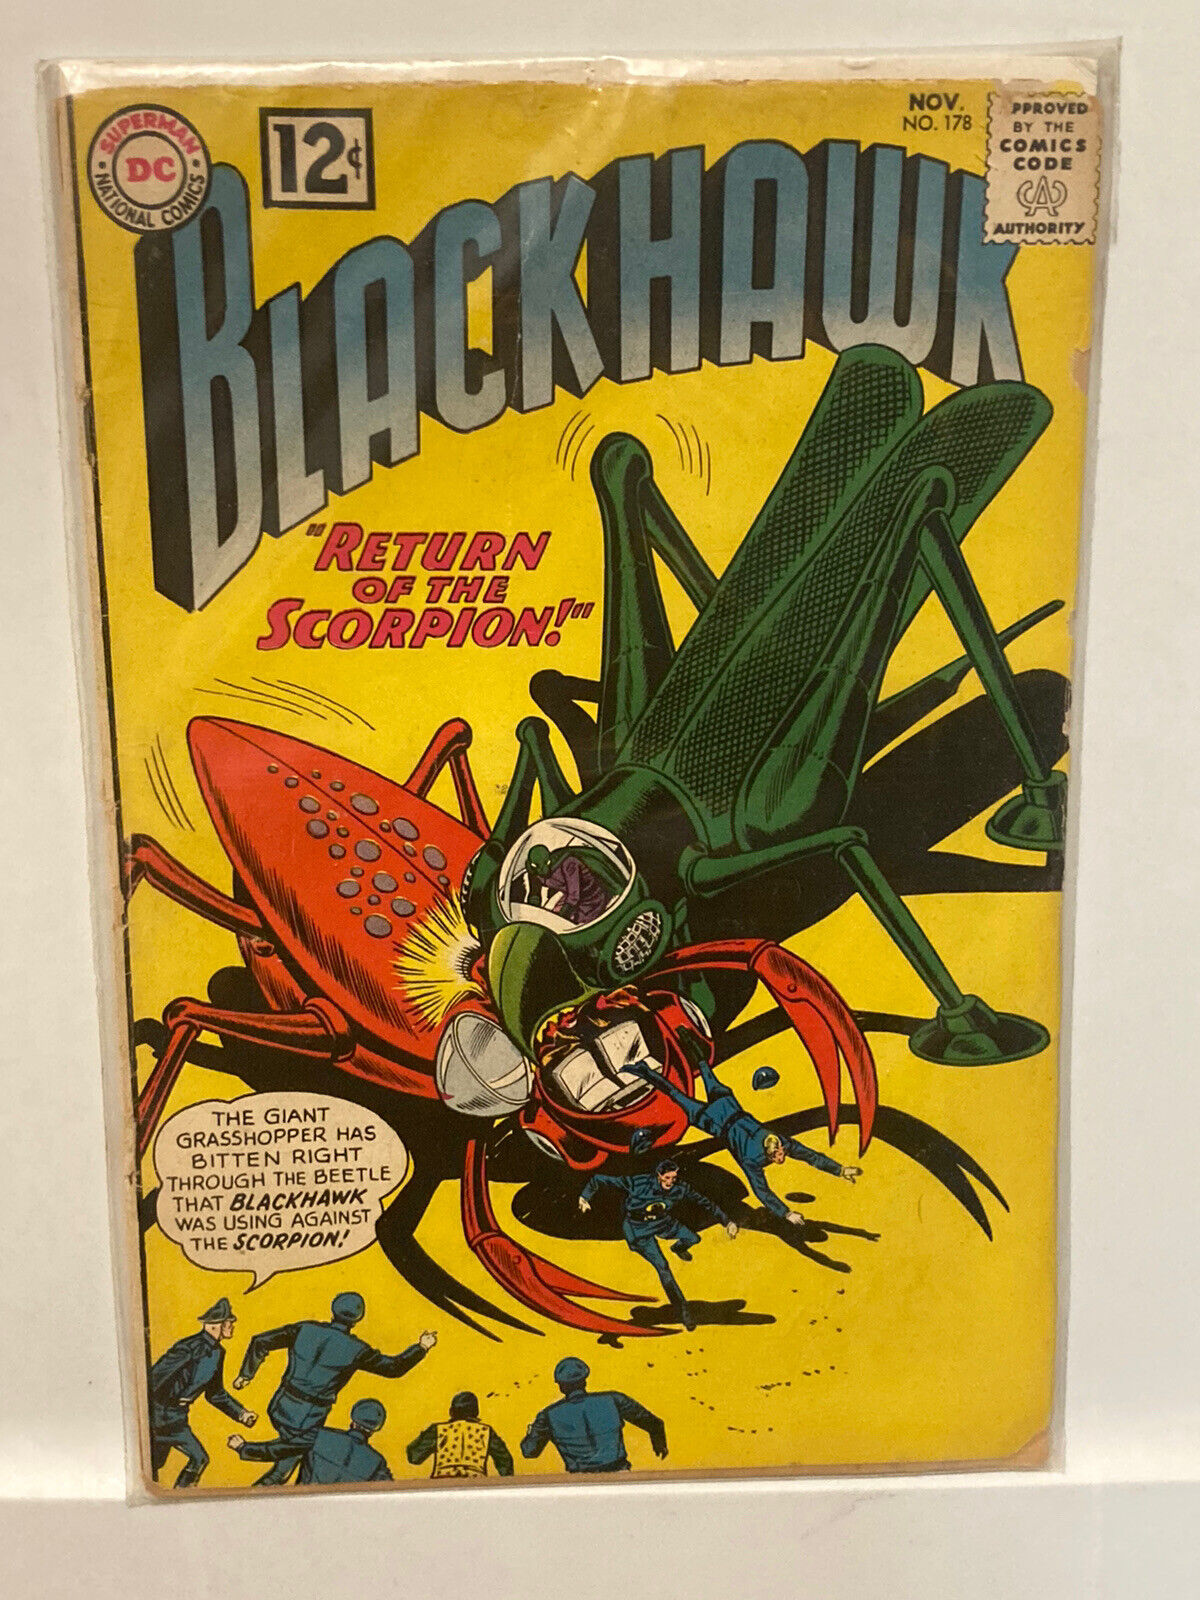 BLACKHAWK #178 DC COMIC - 1962 SILVER AGE- RETURN OF THE ROBOT SCORPION - RARE